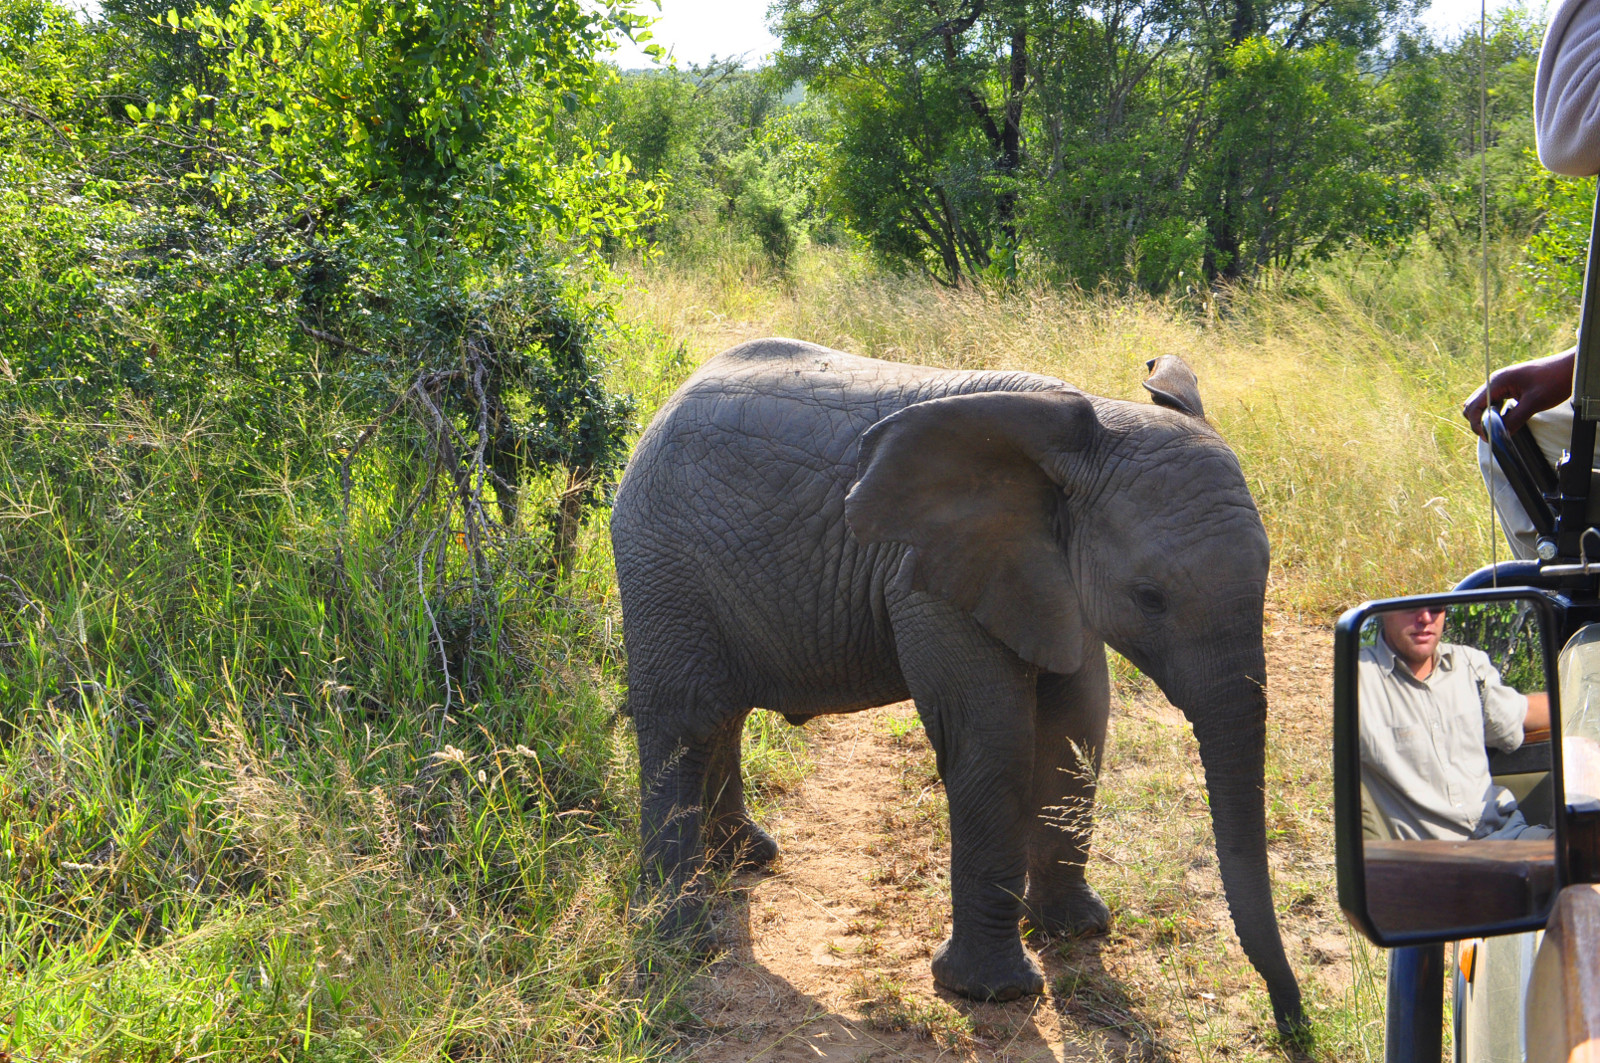 Baby Elephant by the safari vehicle